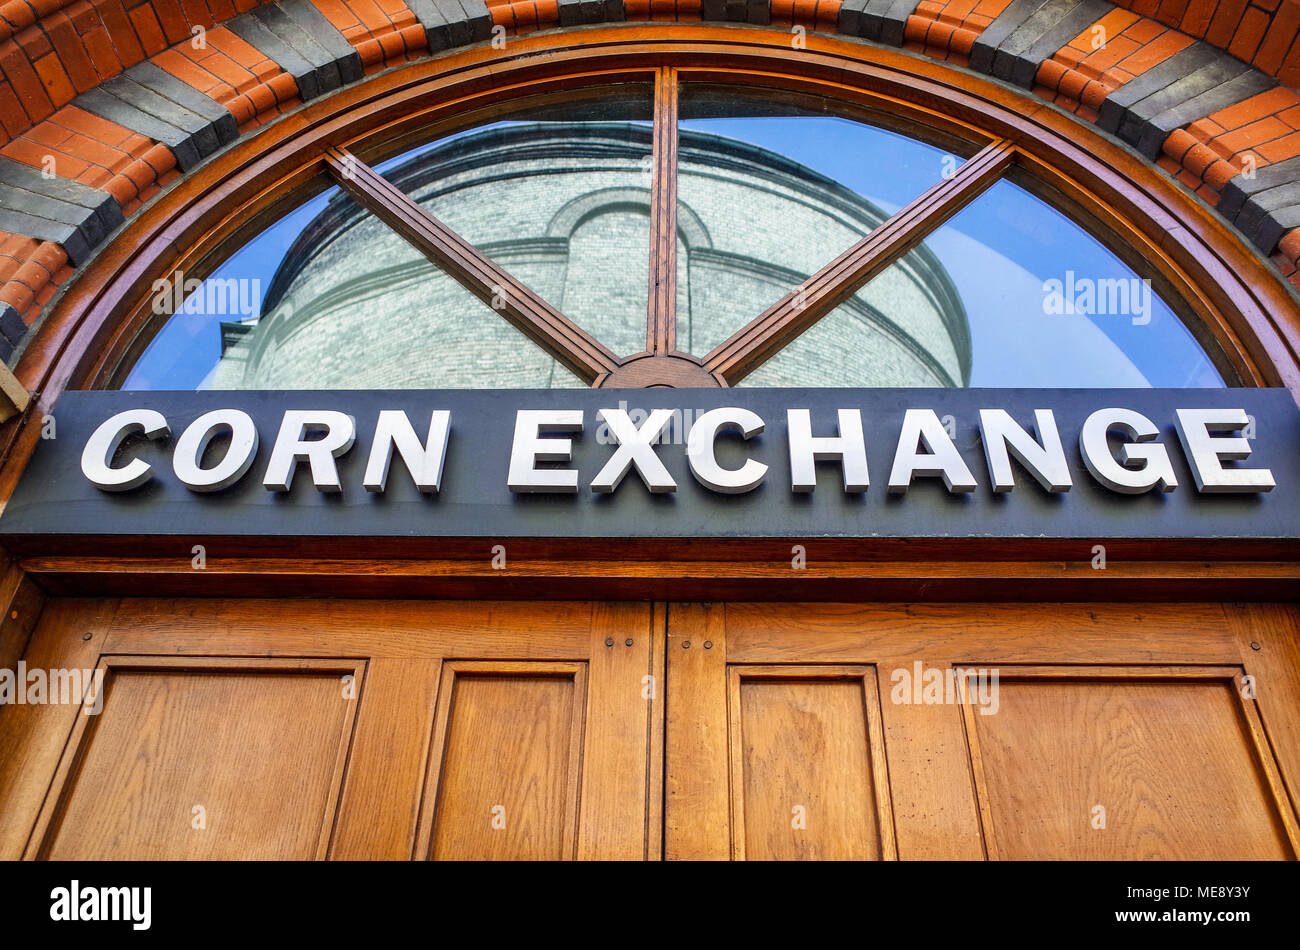 Cambridge Corn Exchange door sign - the Corn Exchange is a concert and events venue in Central Cambridge UK, opened in 1875 Stock Photo